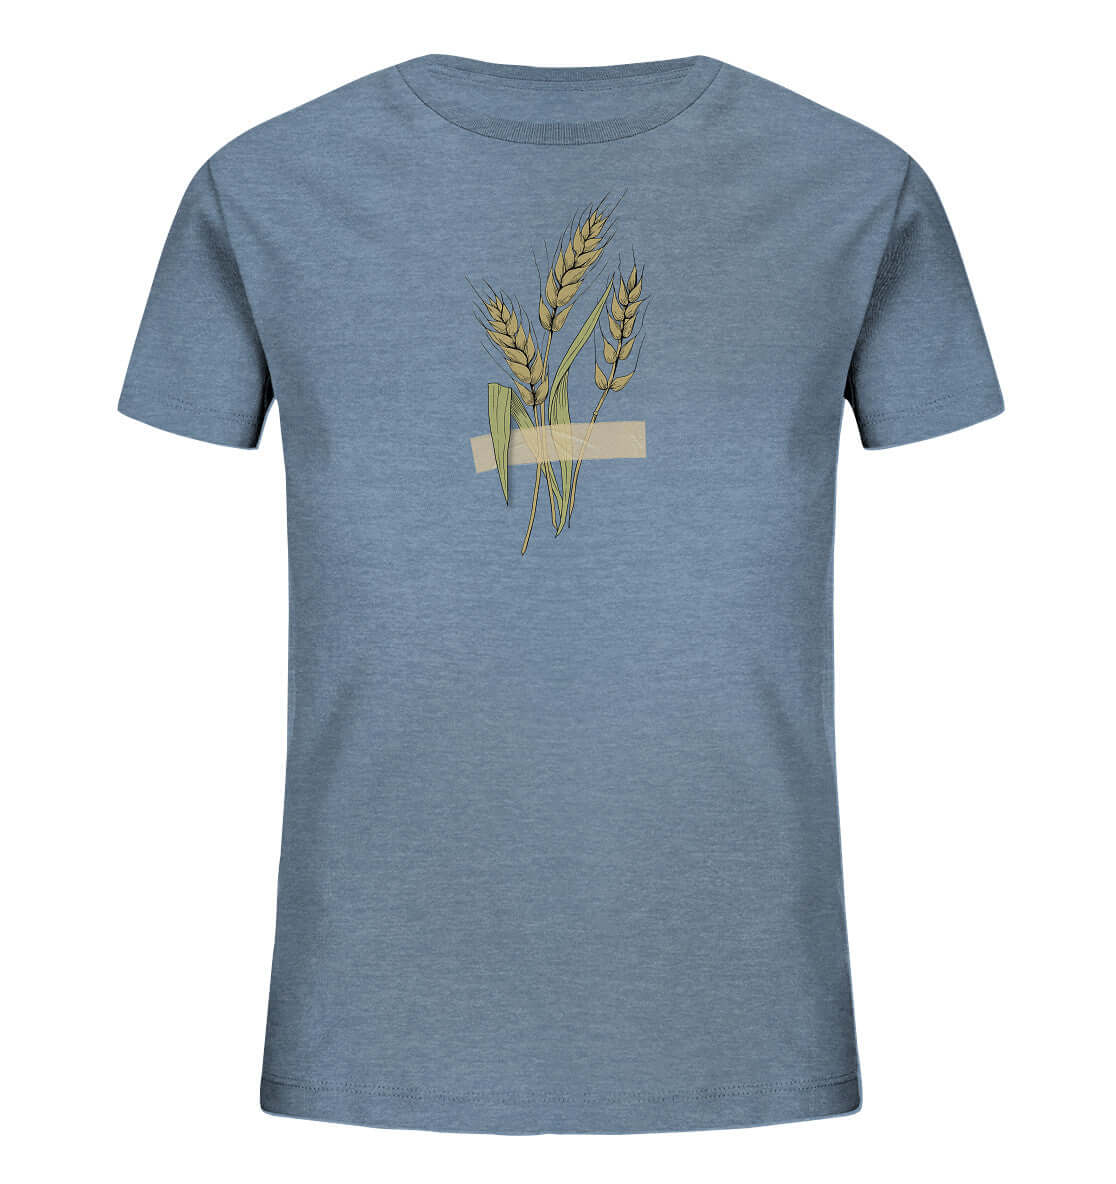 Kinder Shirt Ähre festgeklebt Agrar Acker Weizen Landwirt Shirt Landwirtschaft Dorfkram®